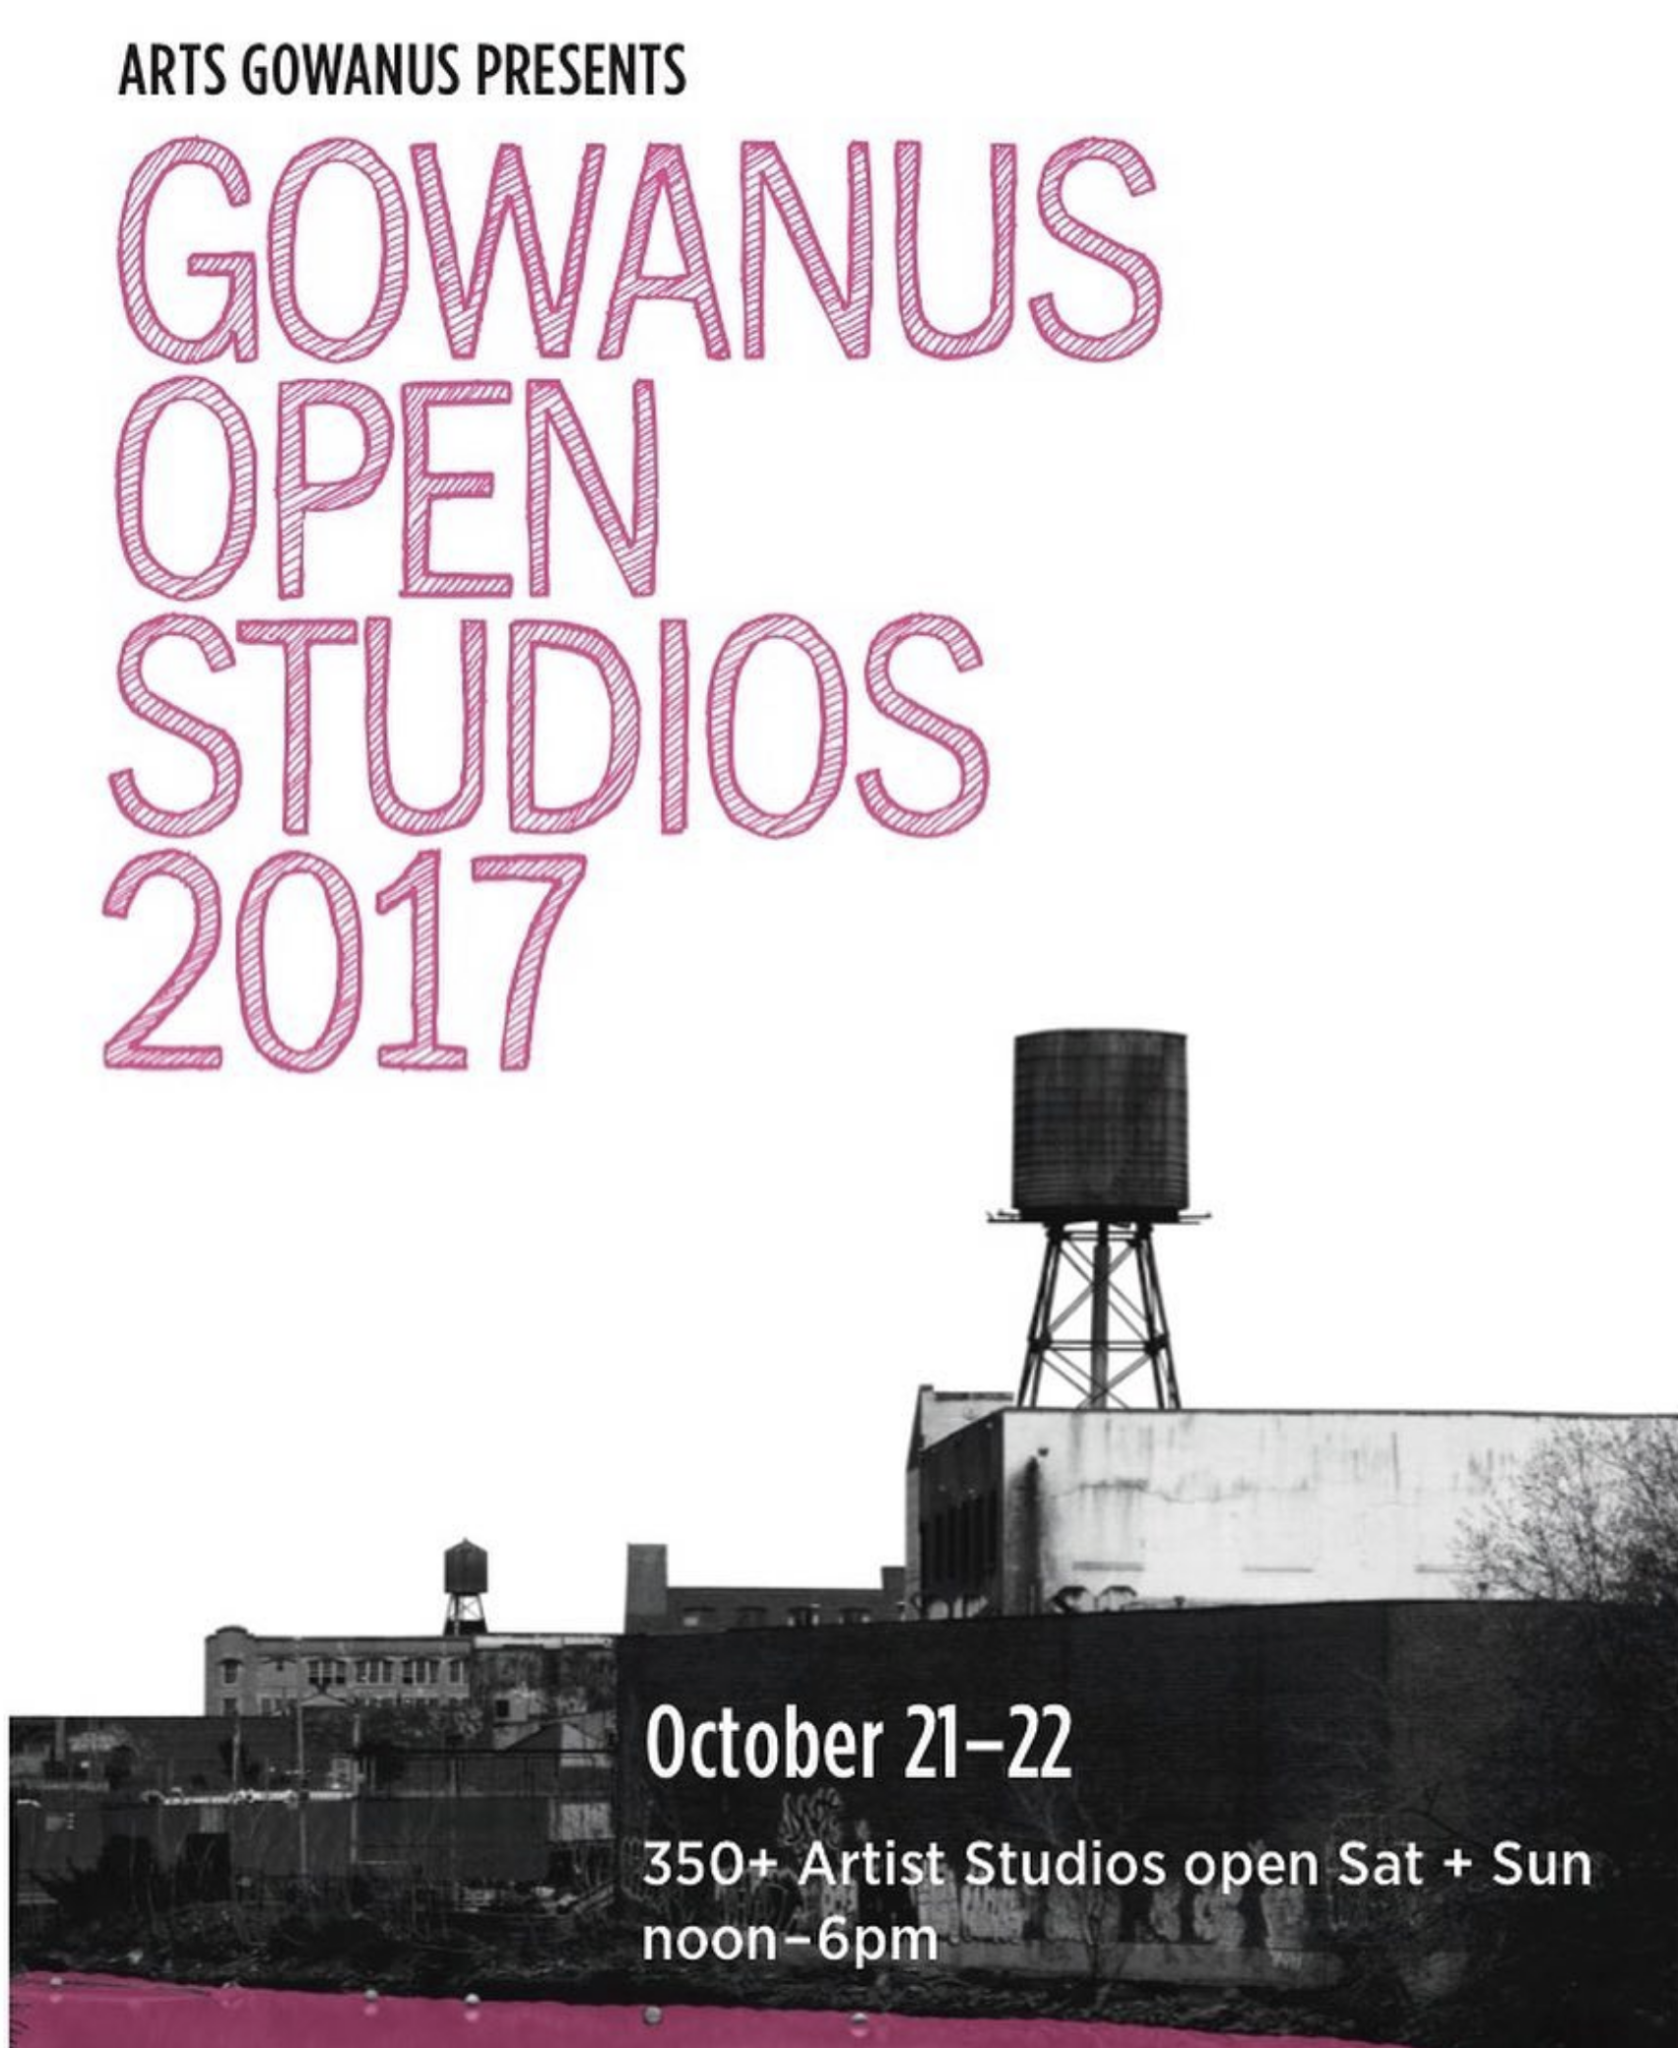 Gowanus Open Studios Showcase 350 Brooklyn Artists This Weekend